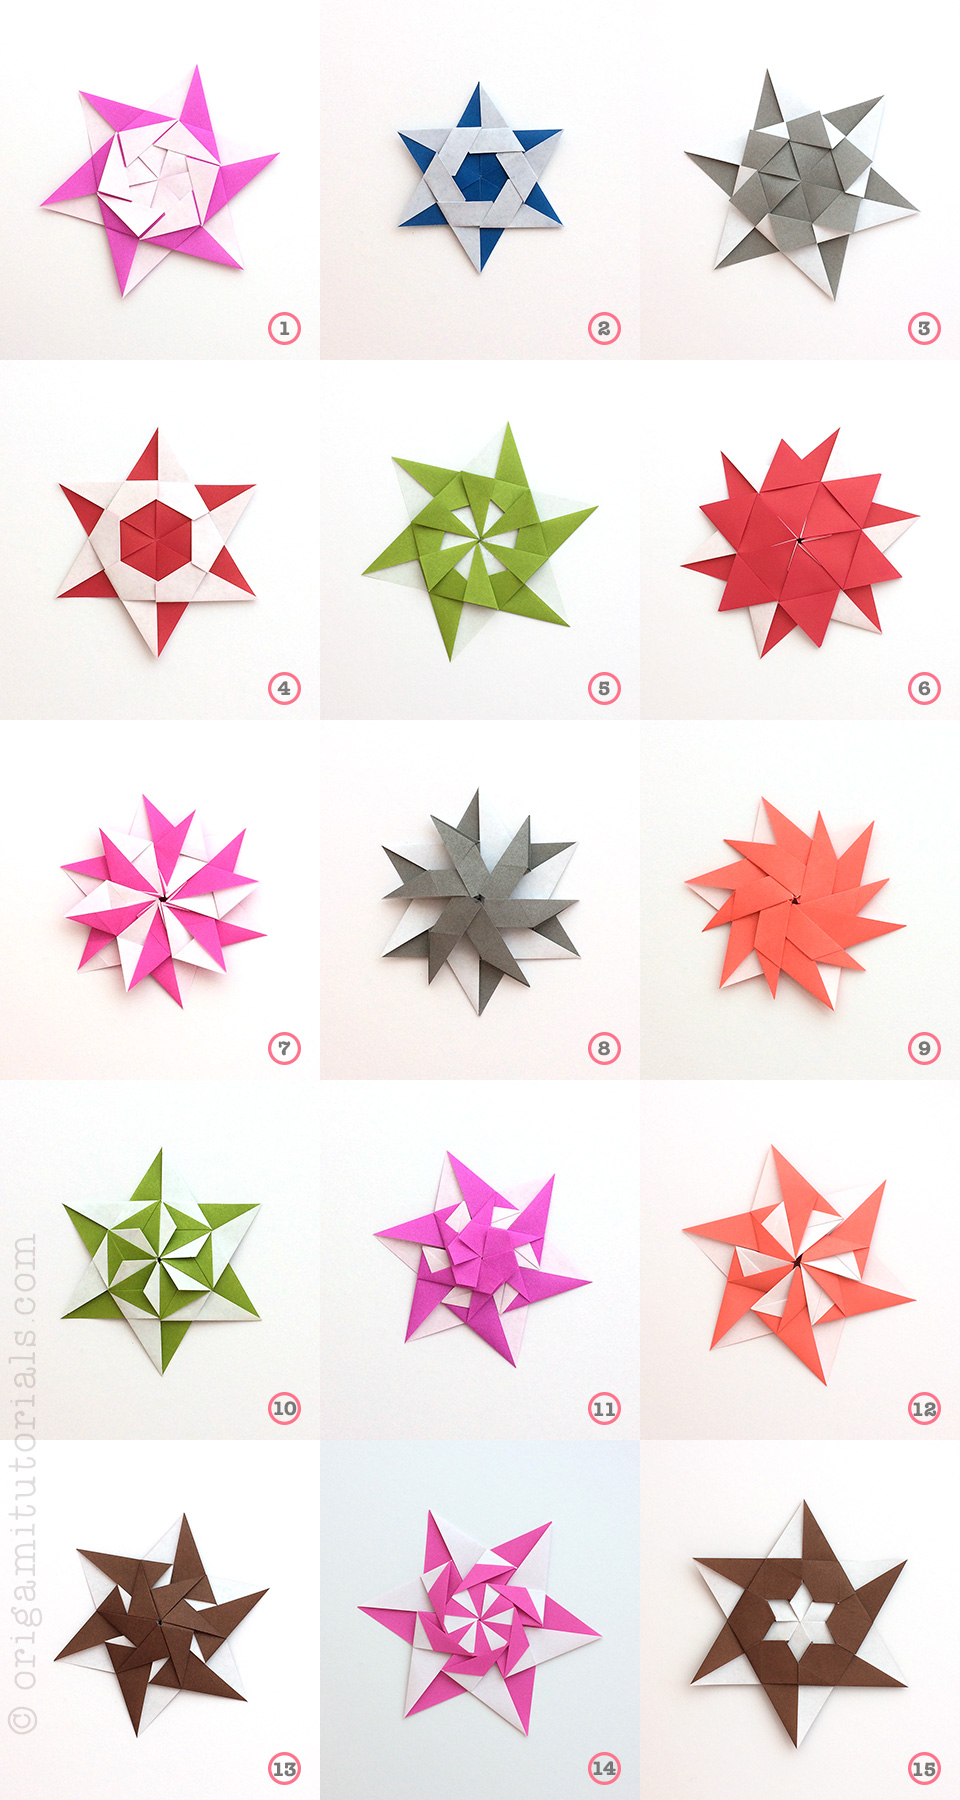 Origami Star How To 15 Chameleon Origami Stars Tutorial Origami Tutorials